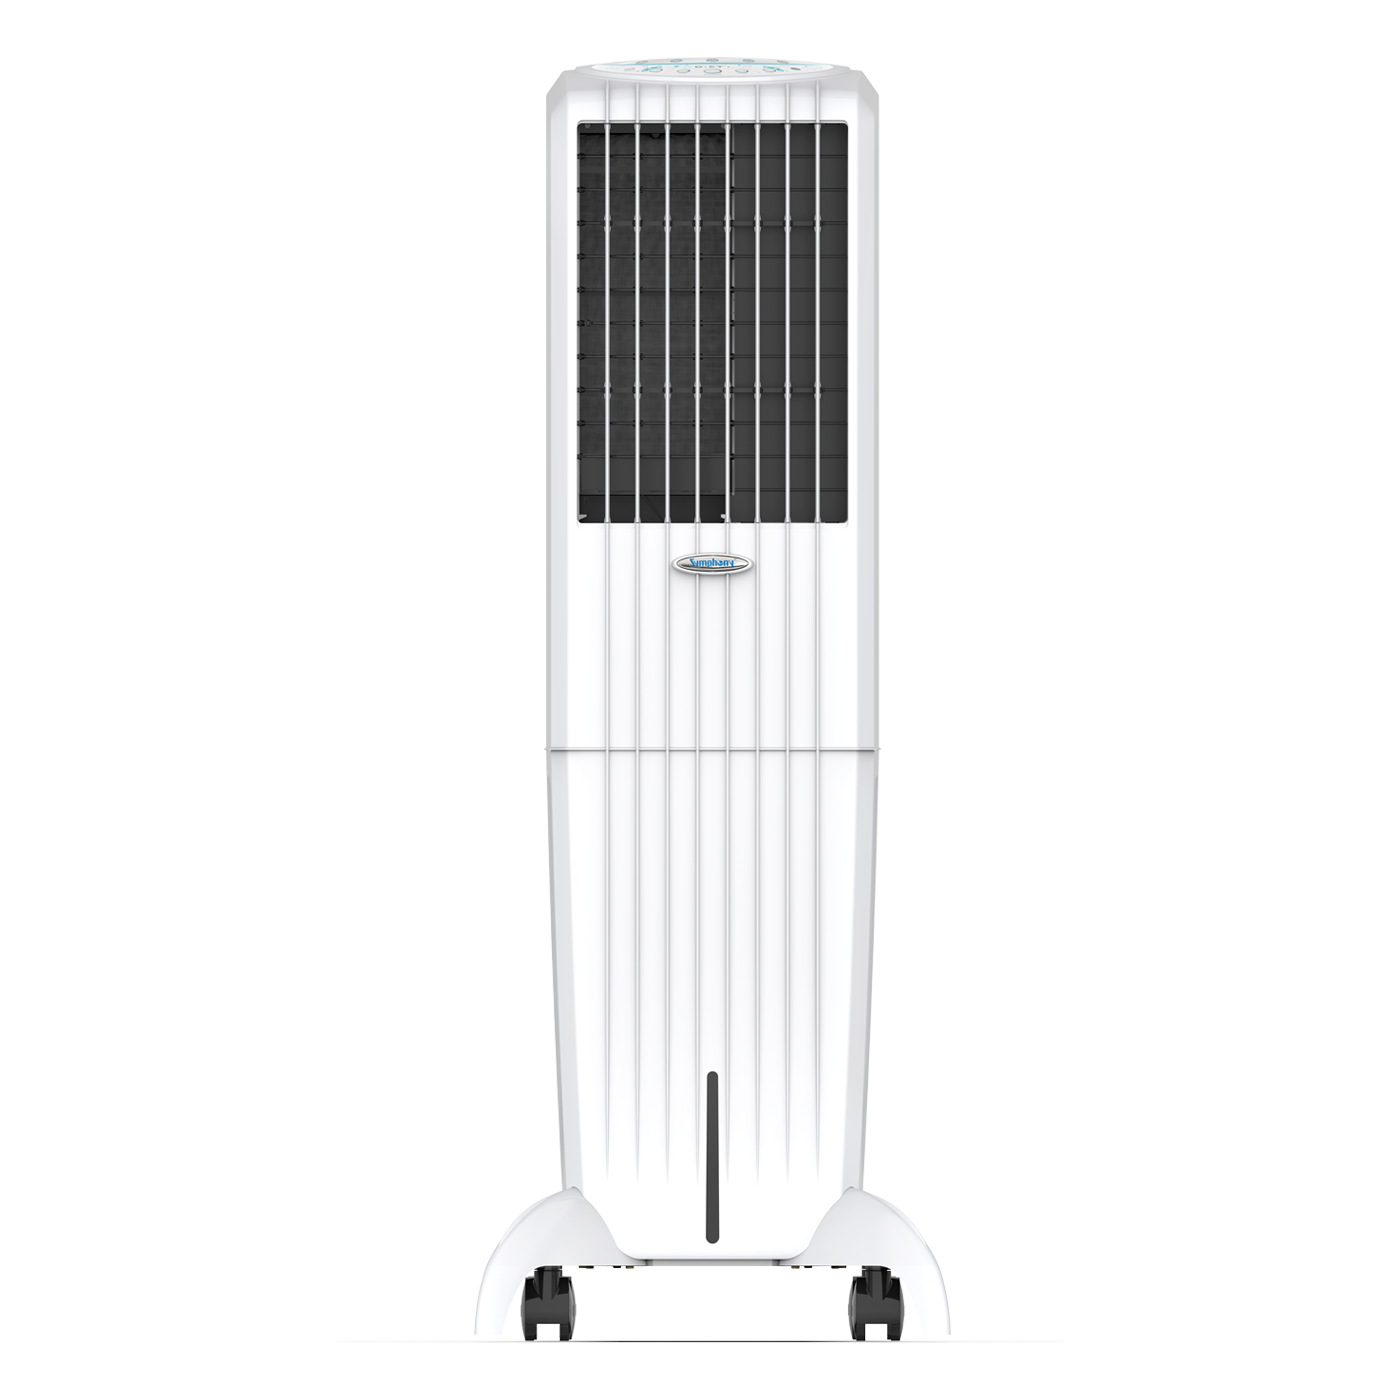 Symphony Diet 35i - 35-Litre Air Cooler for Medium Room Up to 15 Sq Mt.